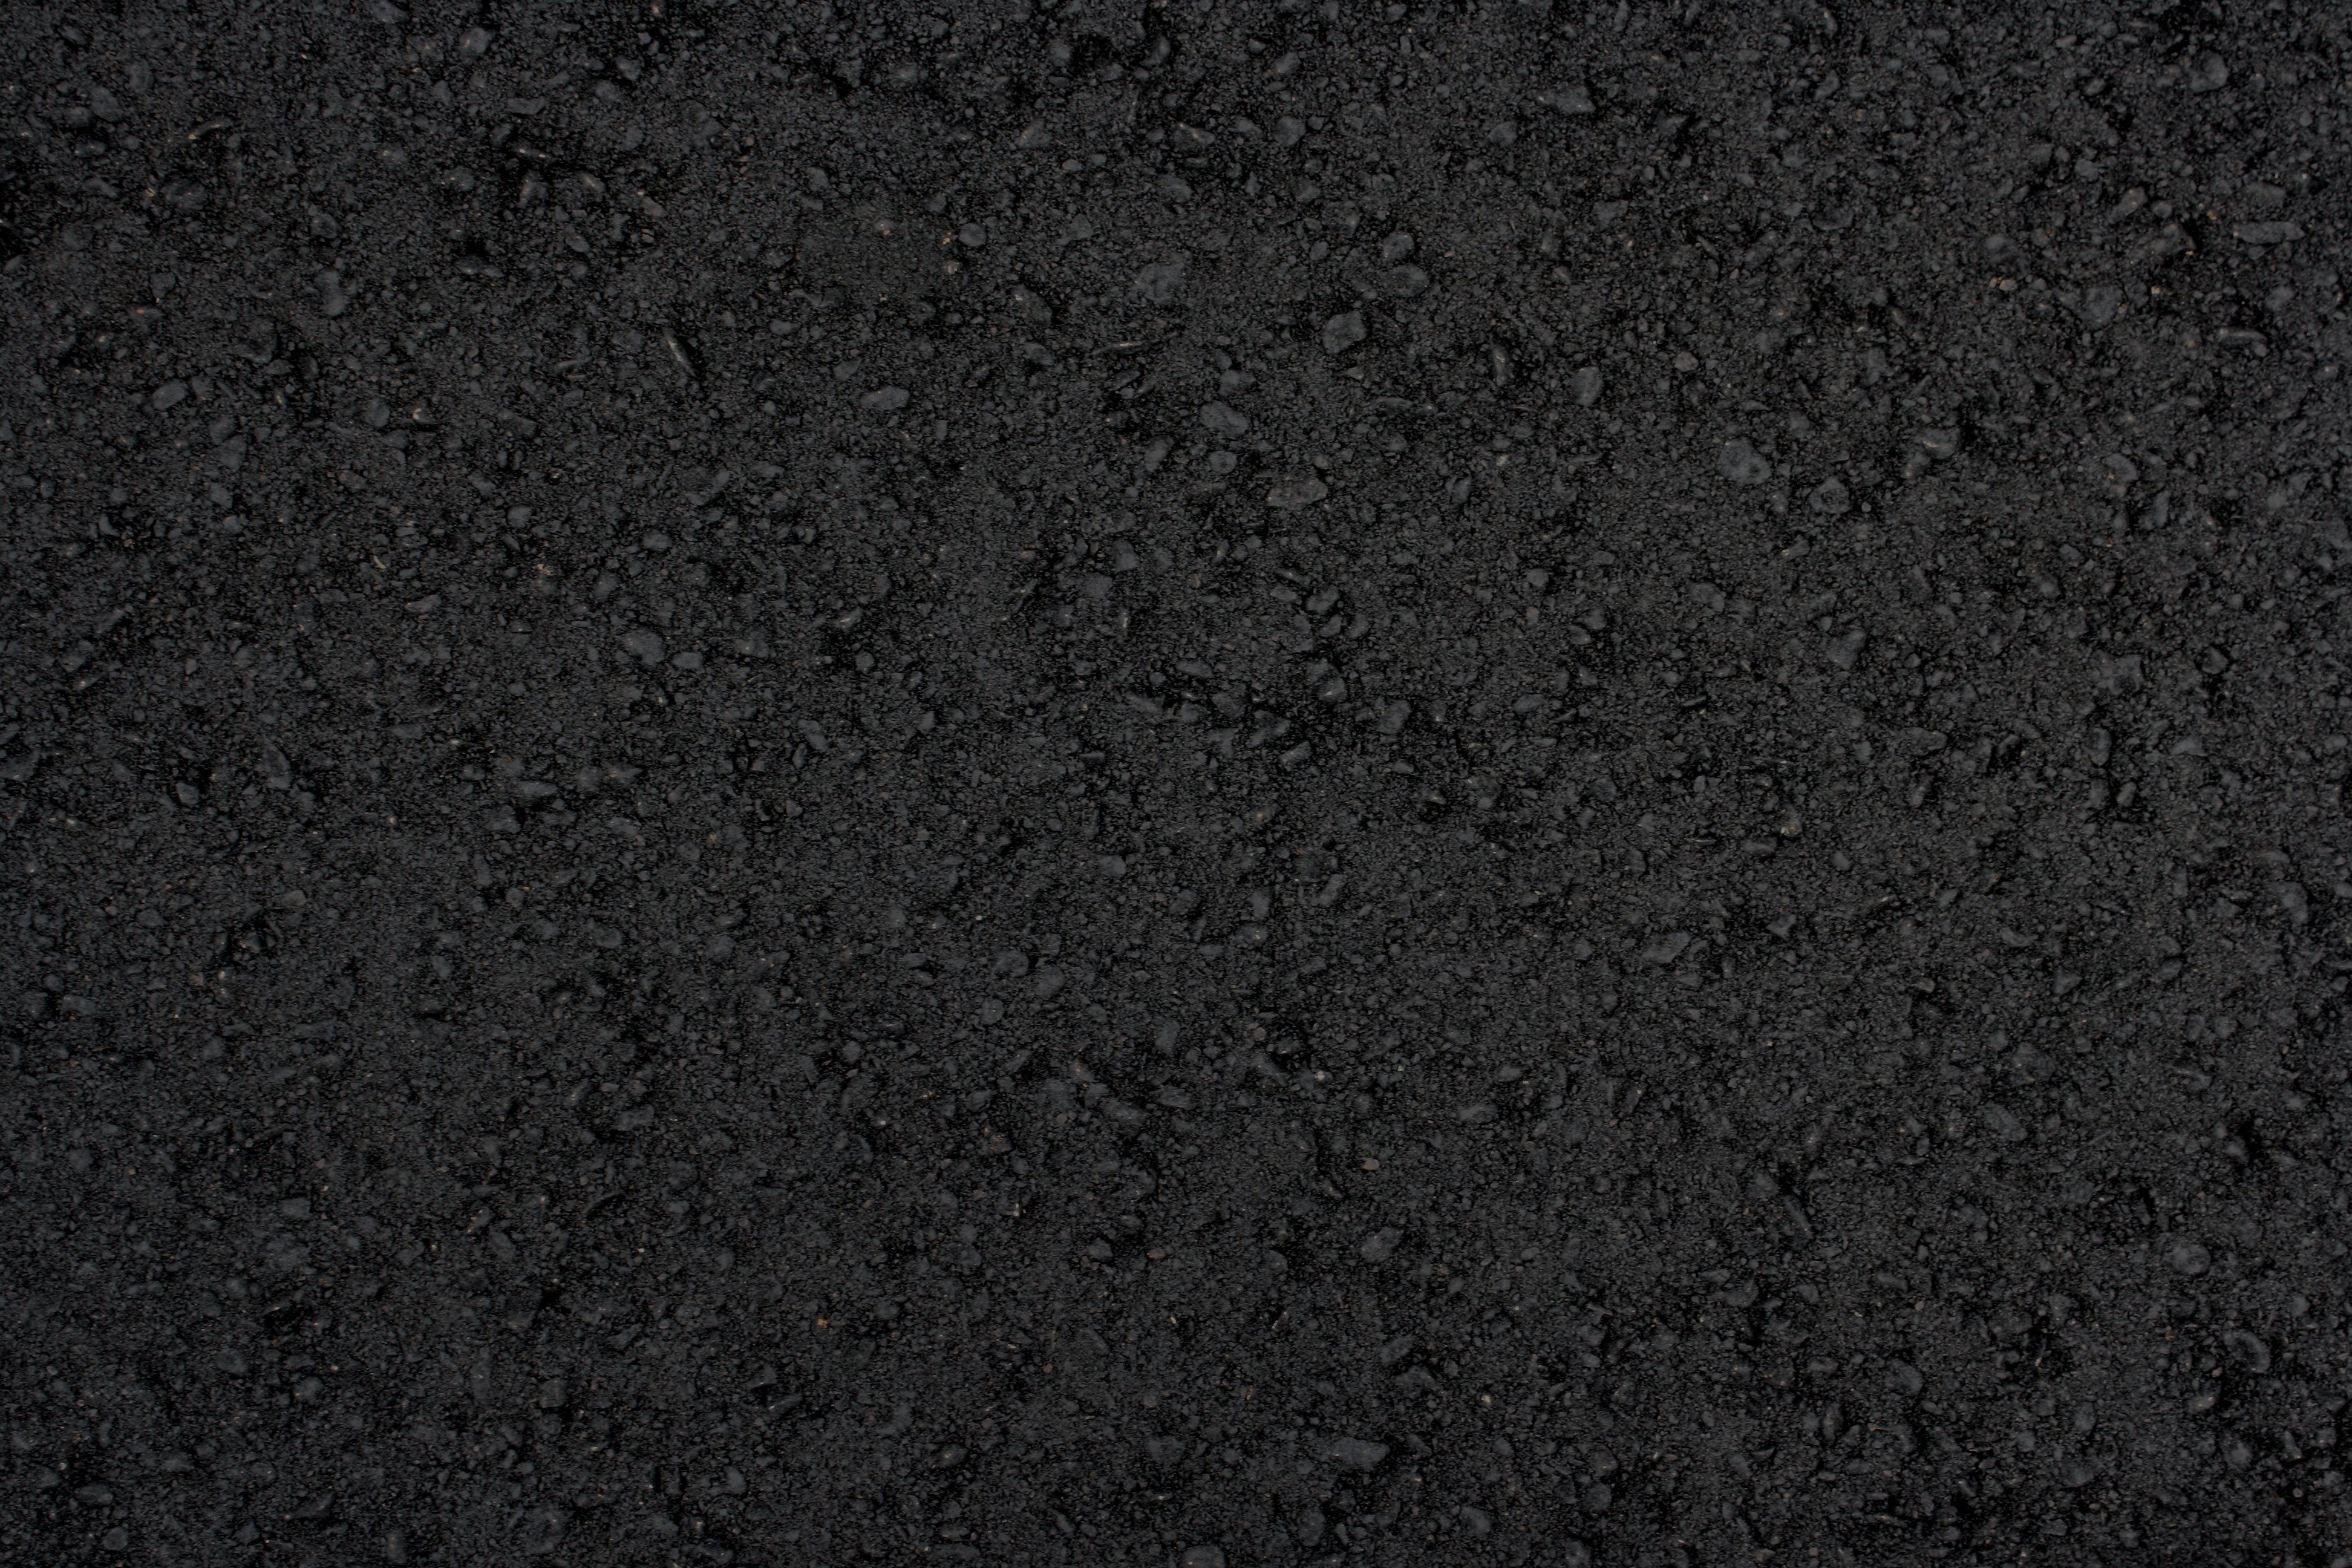 Fresh poured black asphalt texture image hd download